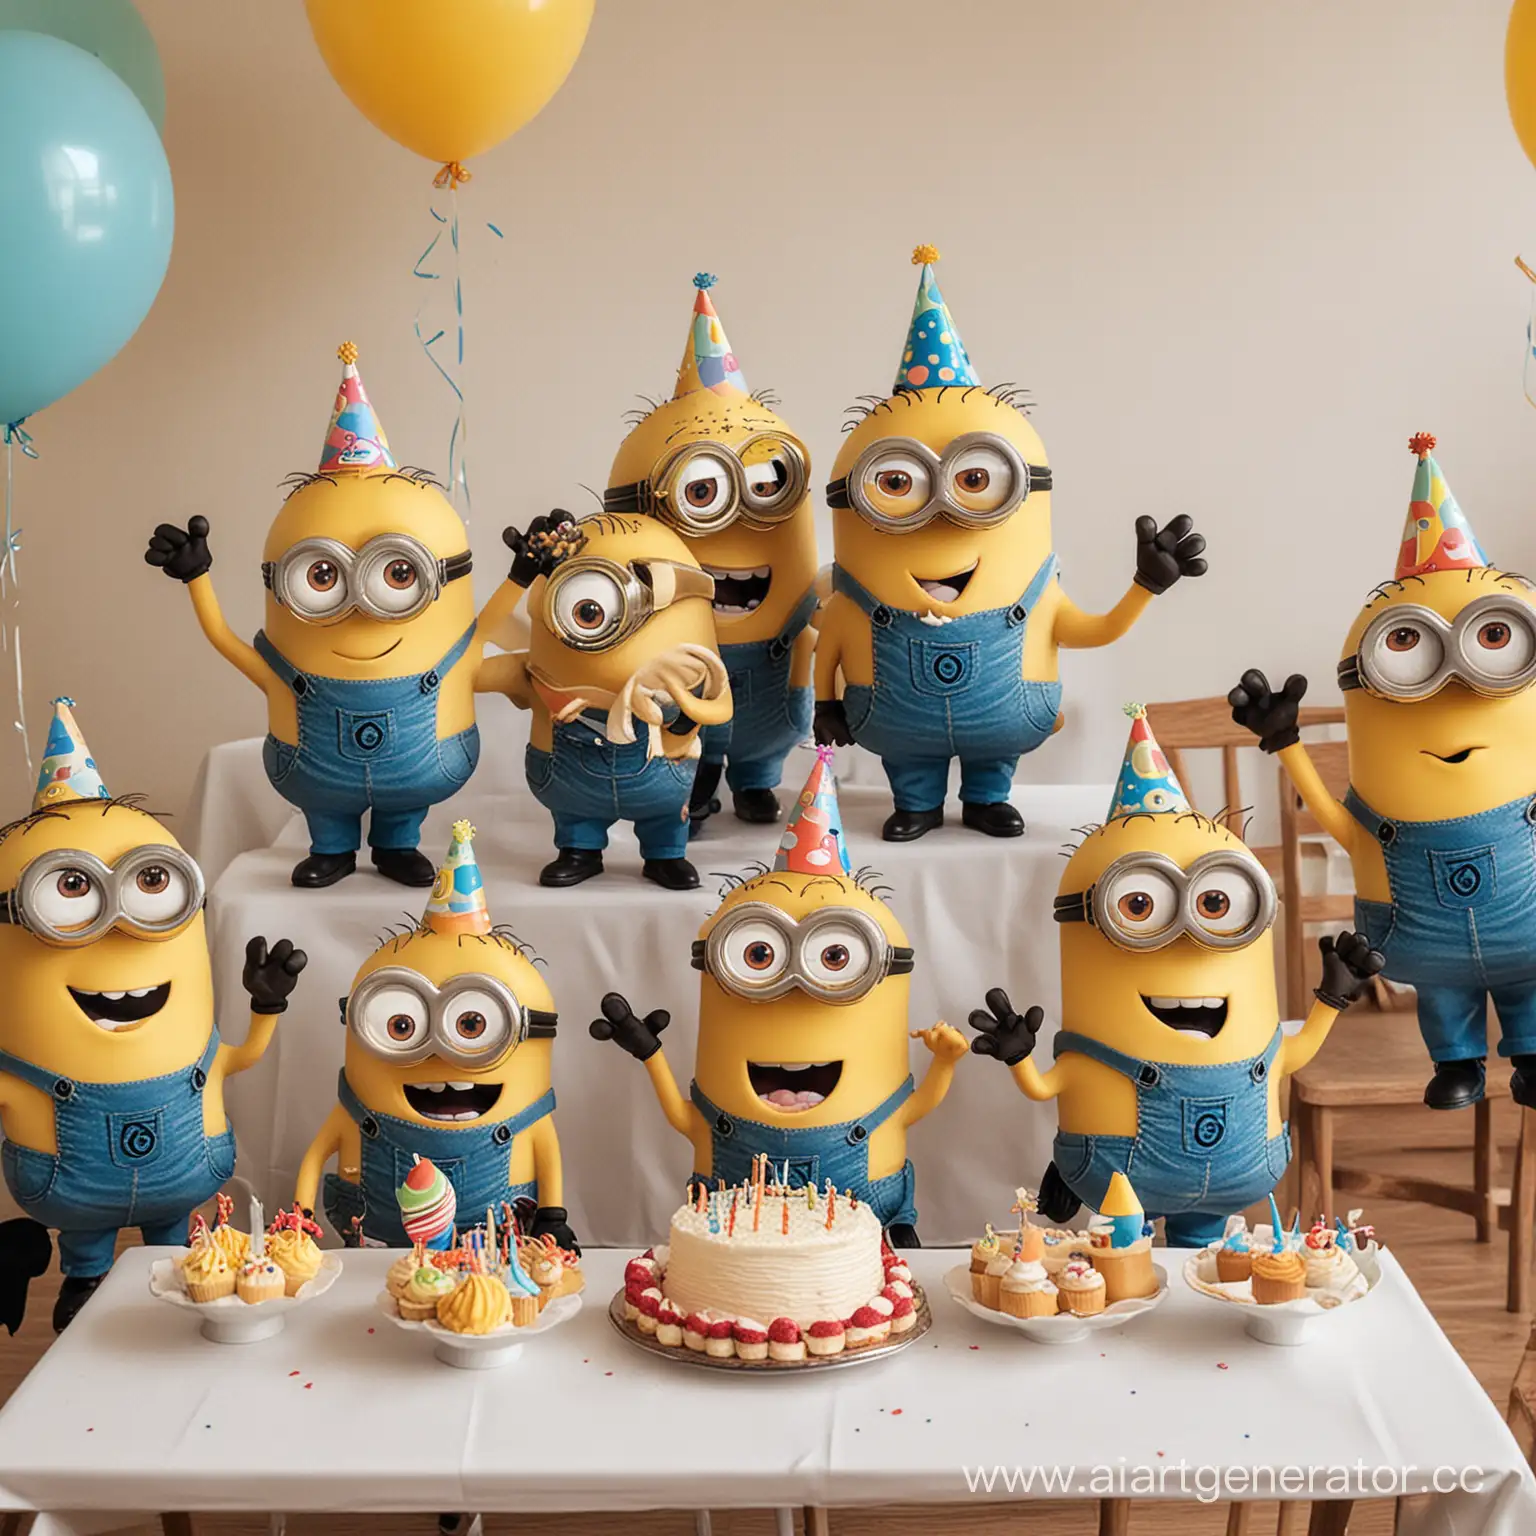 Joyful-Minions-Celebrating-at-a-Vibrant-Birthday-Party